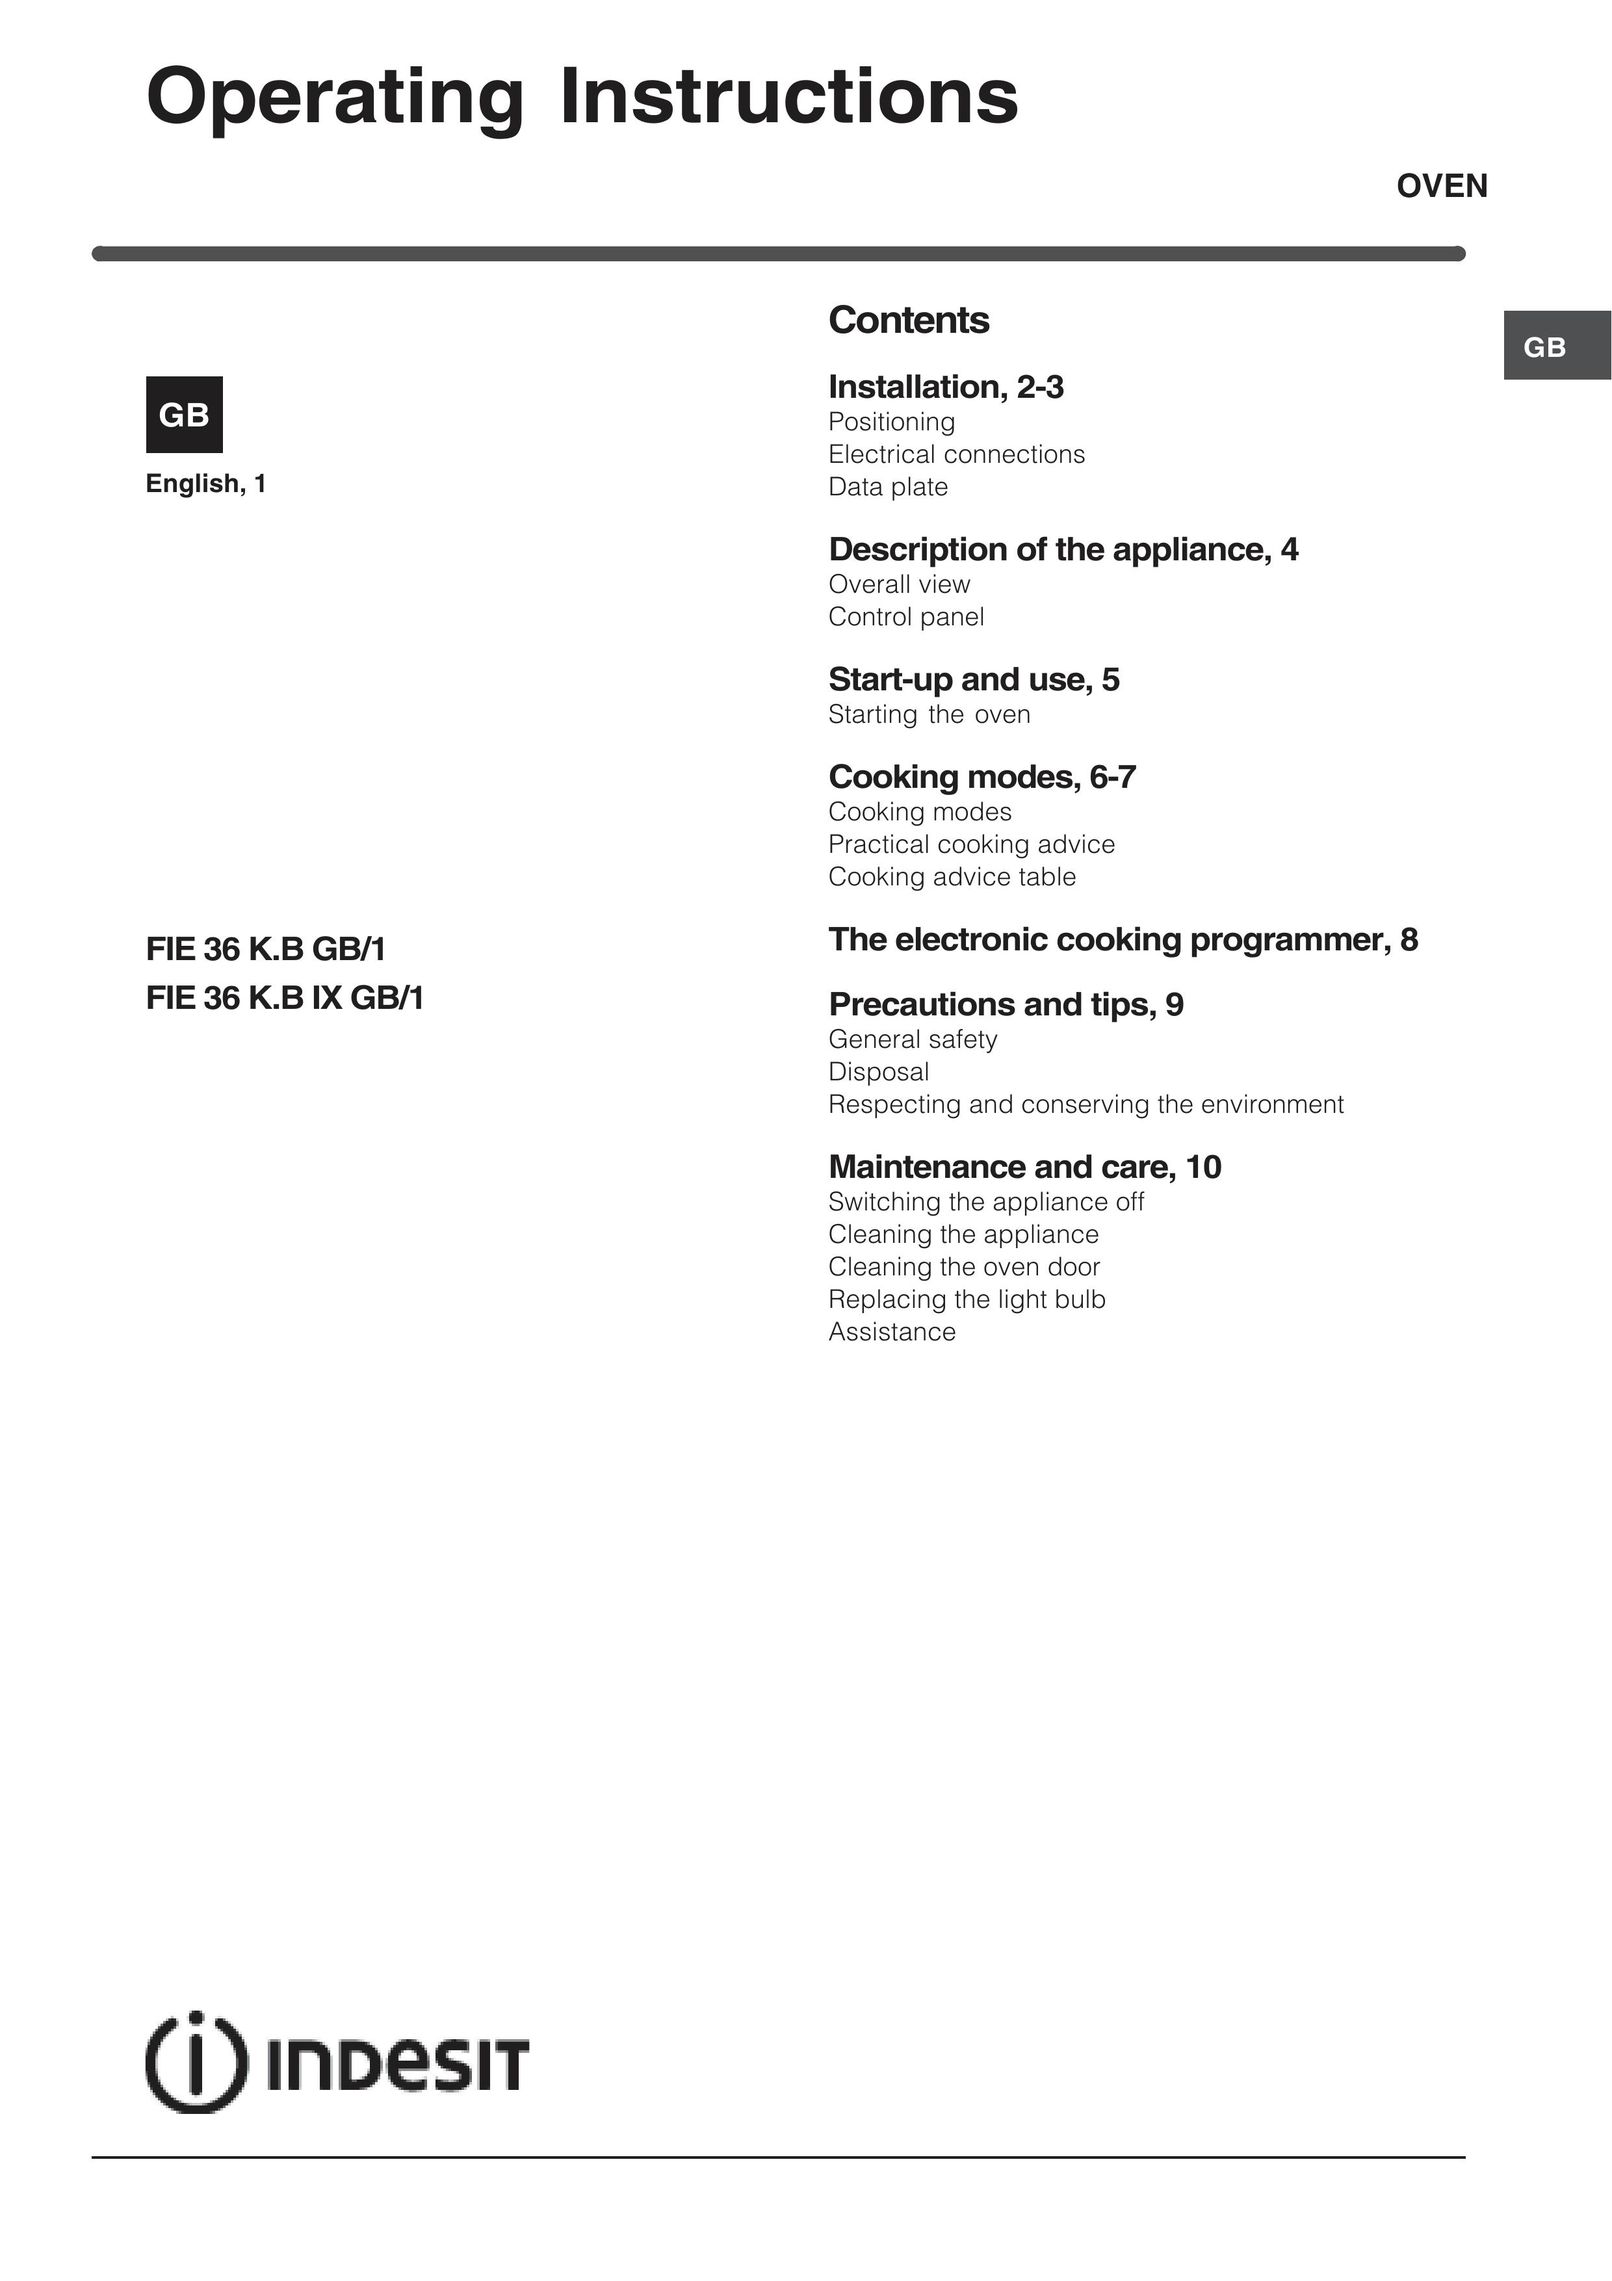 Indesit FIE 36 K.B IX GB/1 Oven User Manual